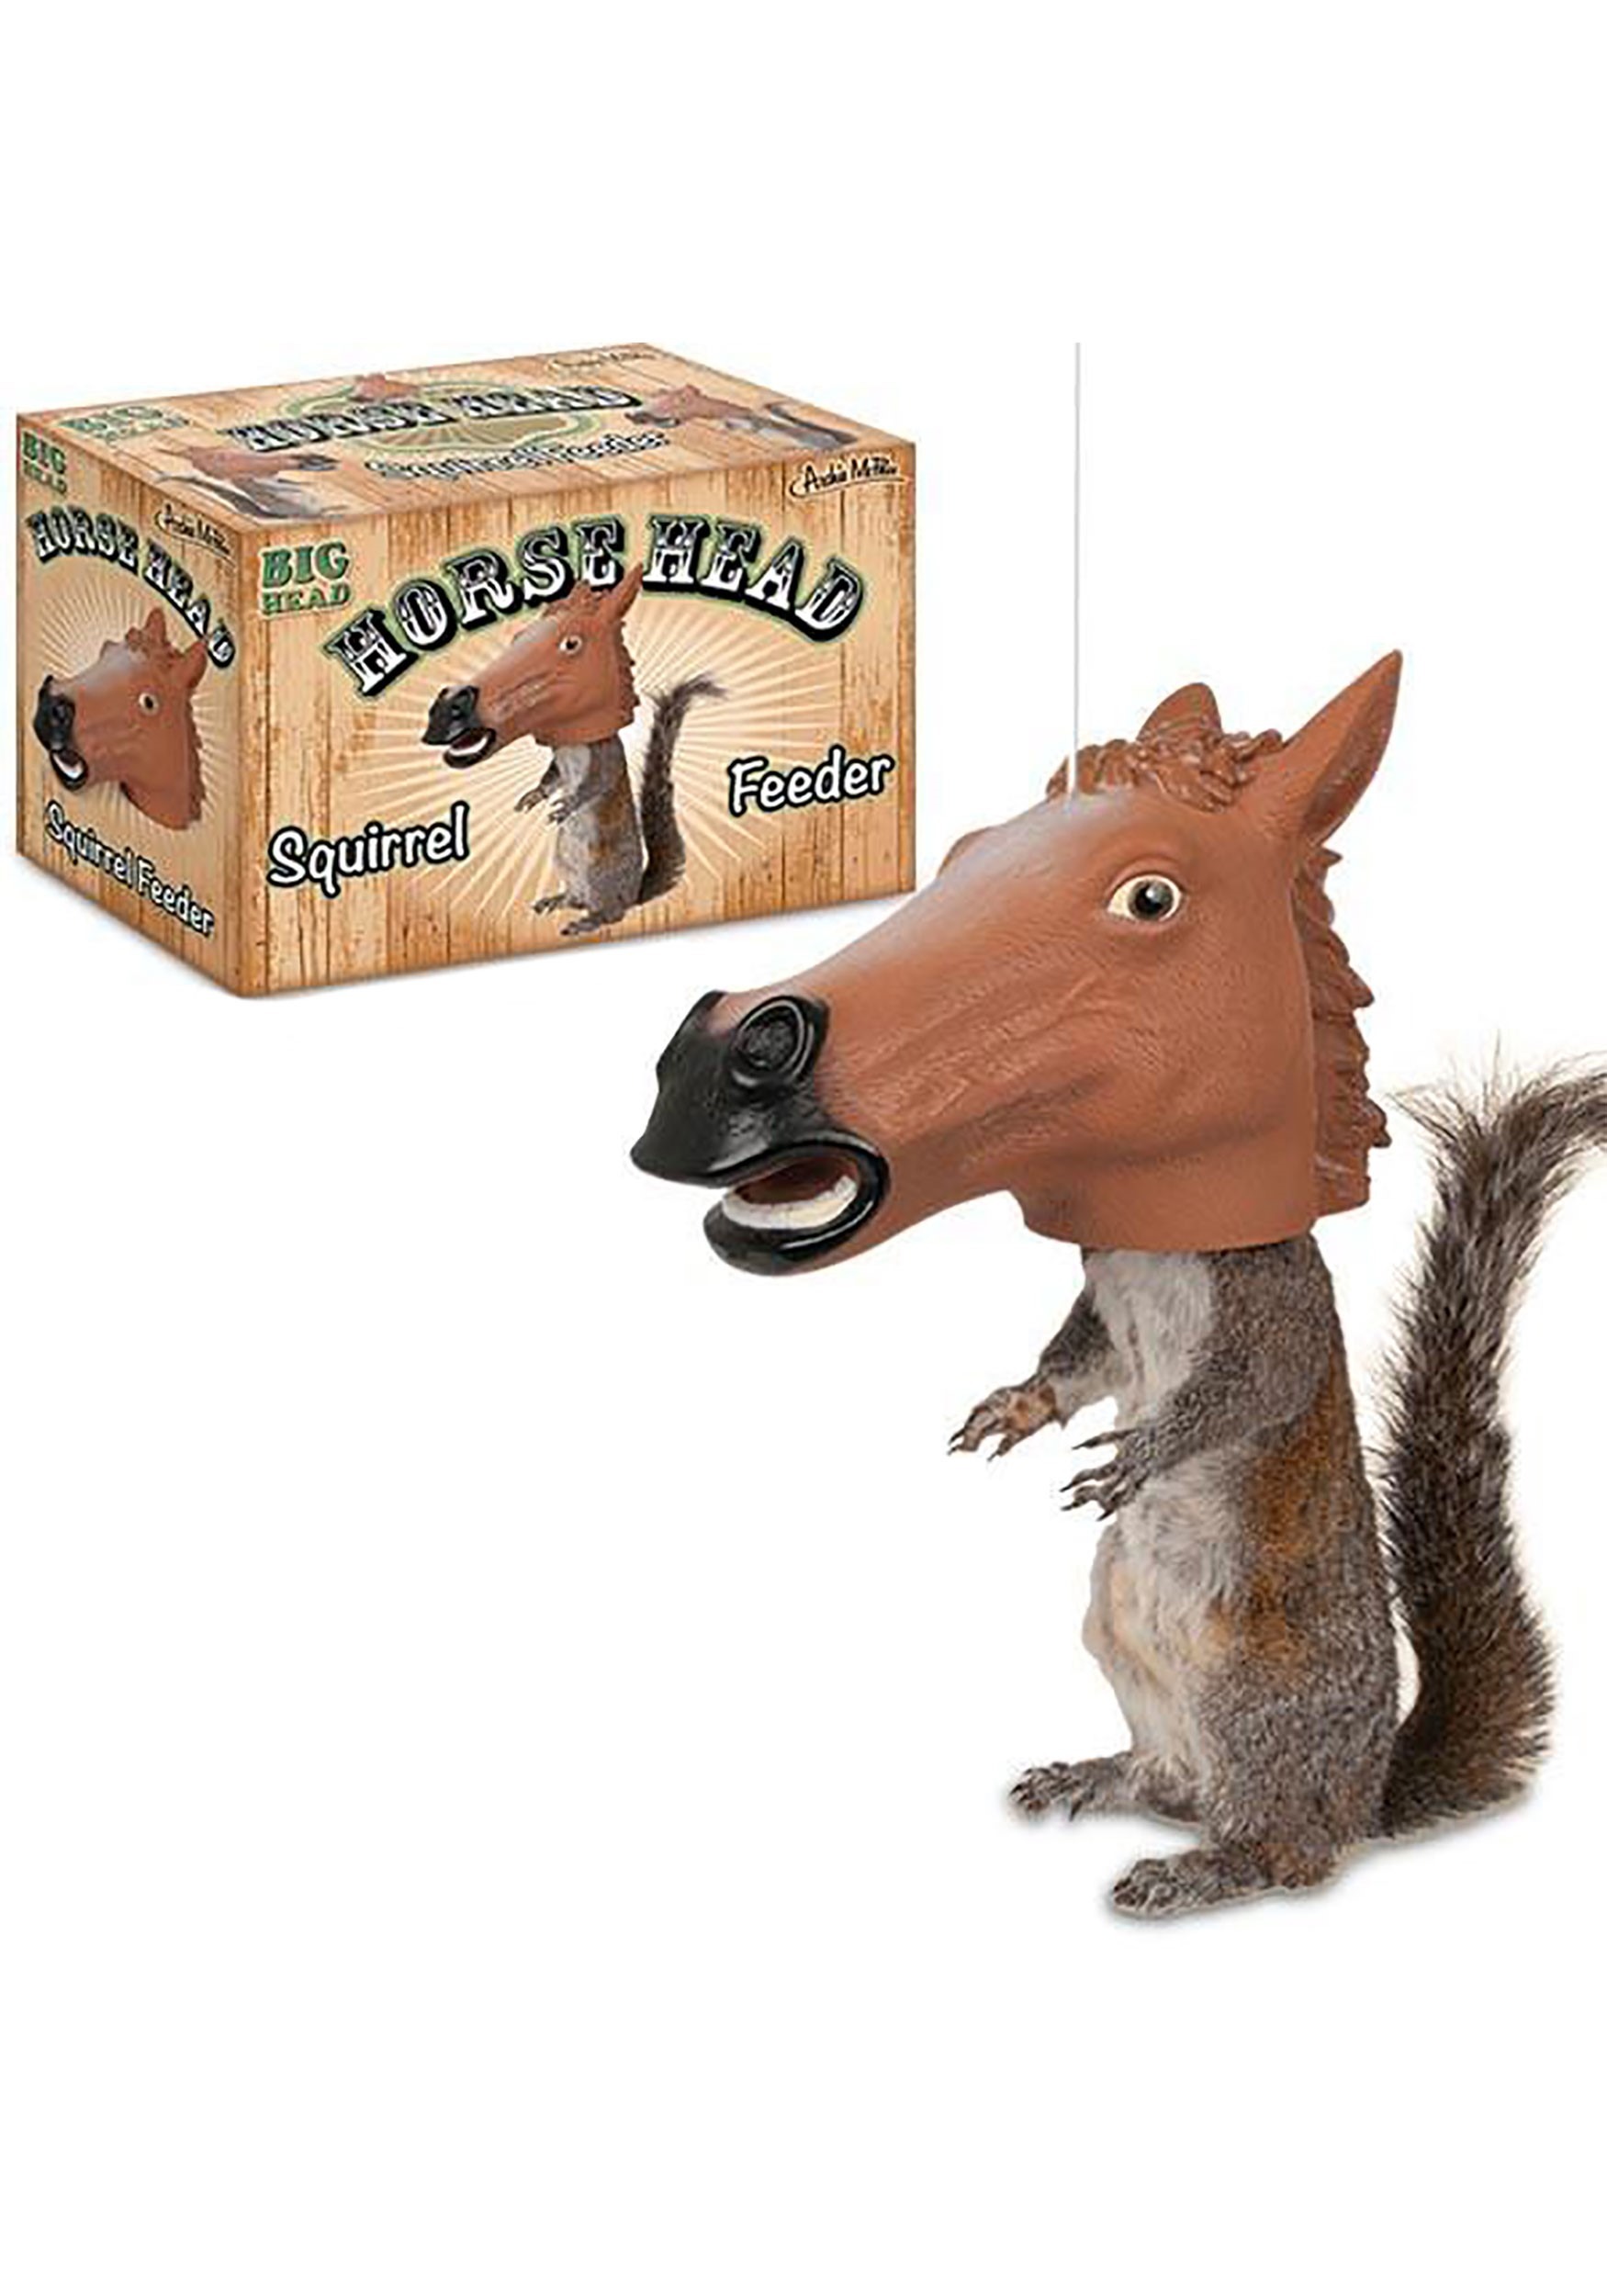 Horse Head Vinyl Squirrel Feeder